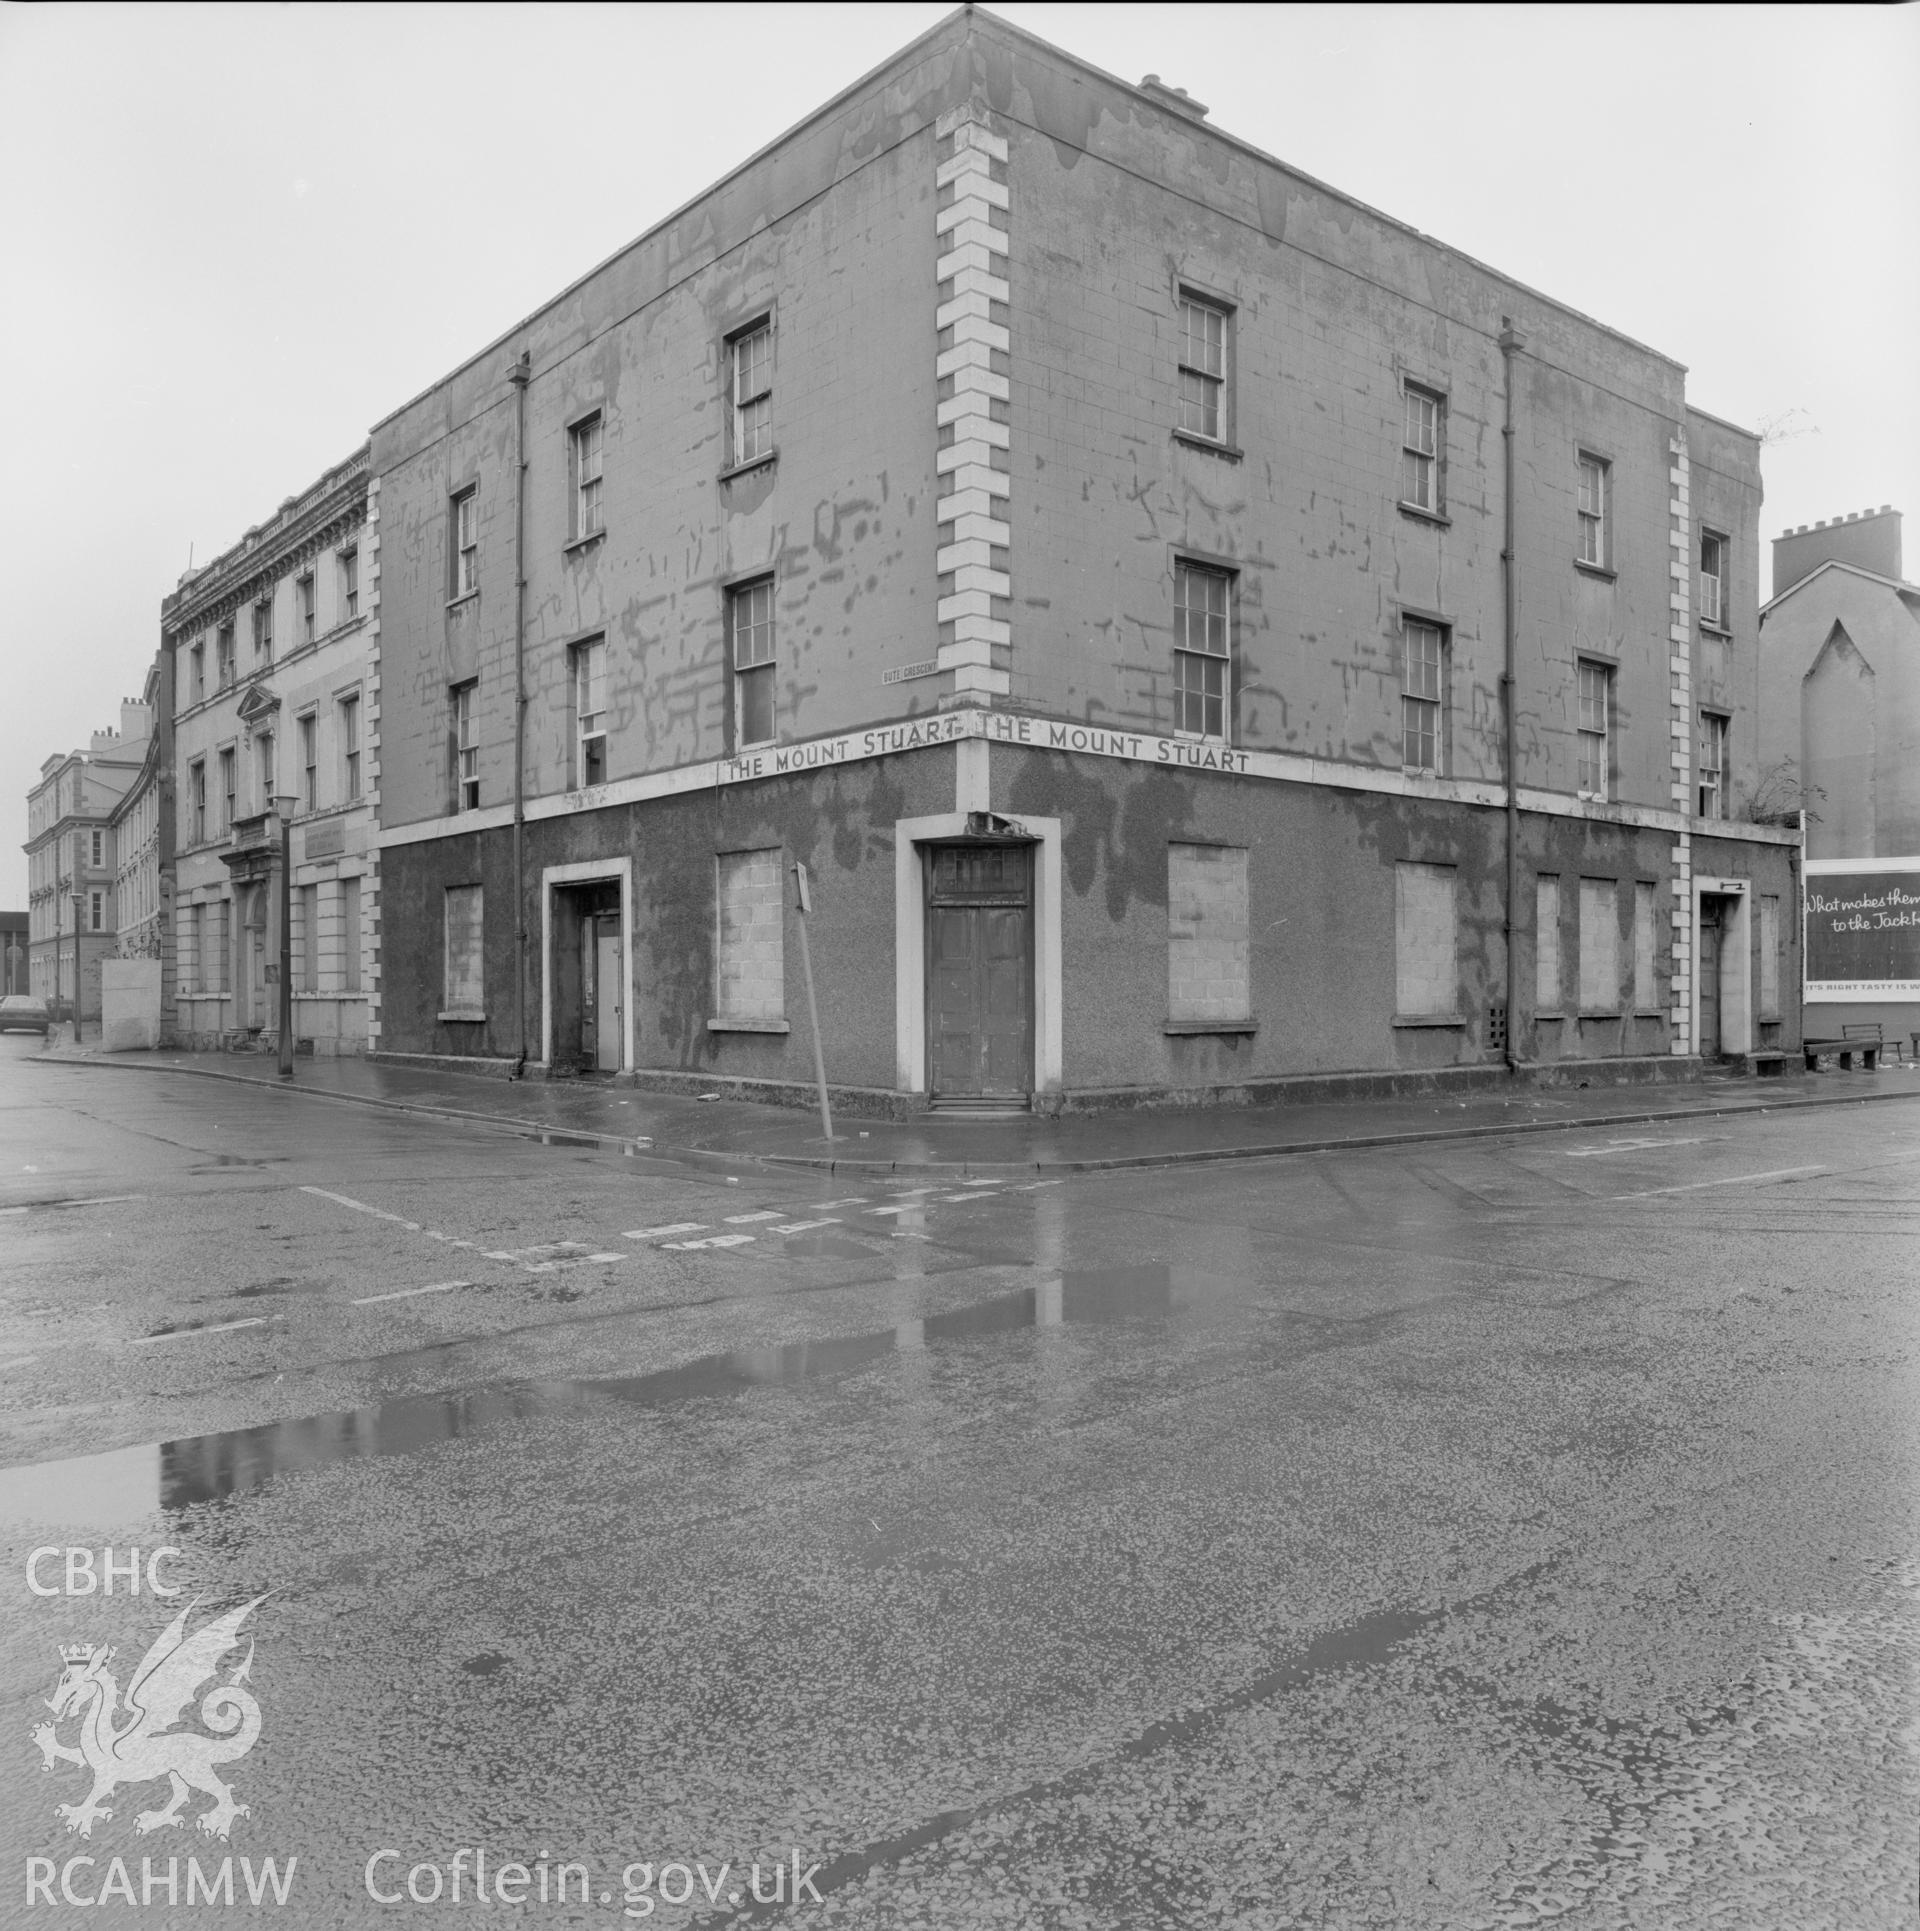 Digital copy of a black and white negative showing Mount Stuart Public House, 1 Bute Crescent, Cardiff.